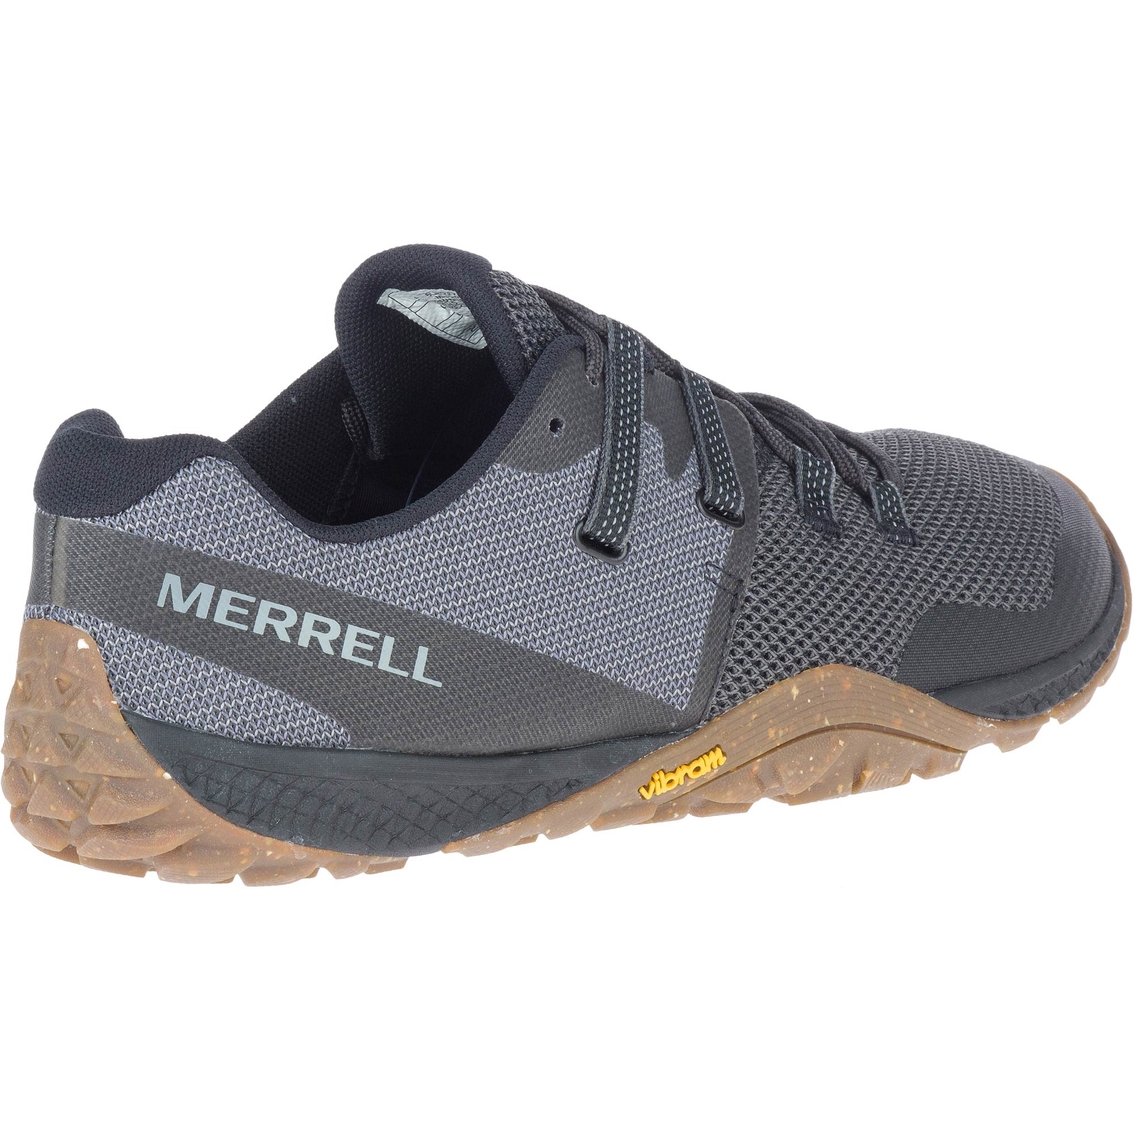 Merrell Men's Trail Glove 6 Training Shoes | Men's Athletic Shoes ...